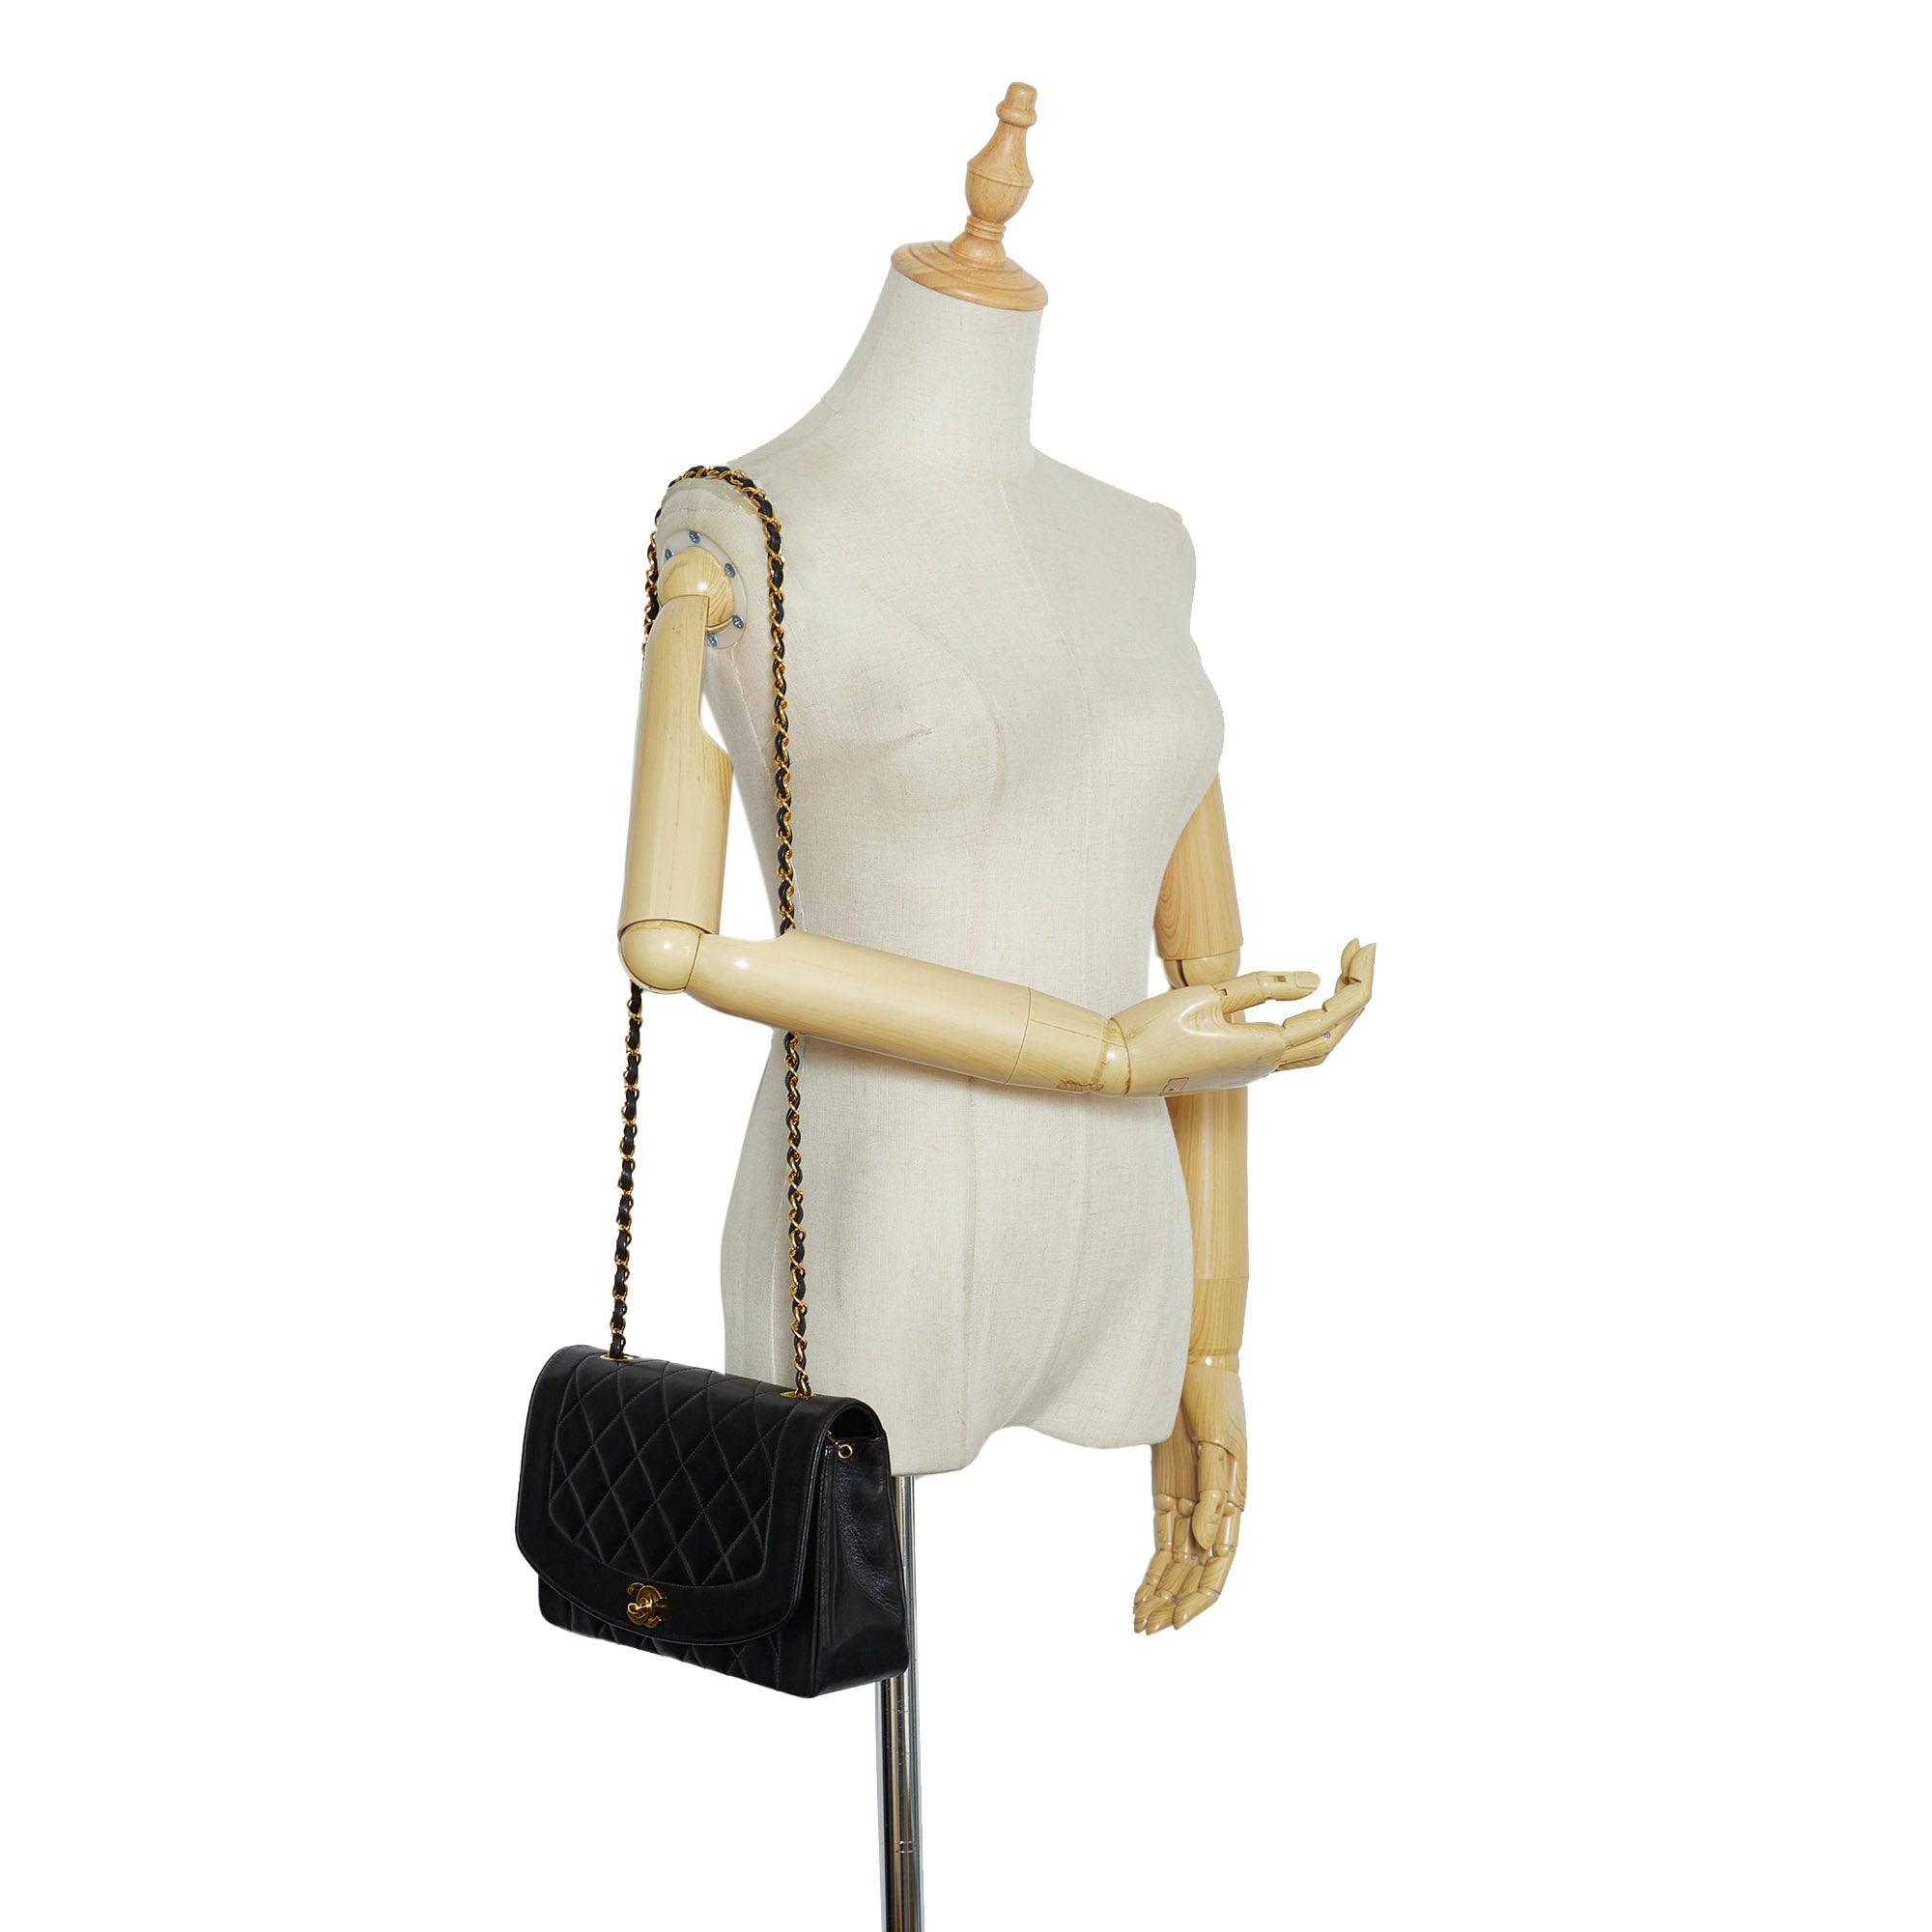 Chanel Pre-Owned 1989-1991 mini Classic Flap Square shoulder bag, HealthdesignShops